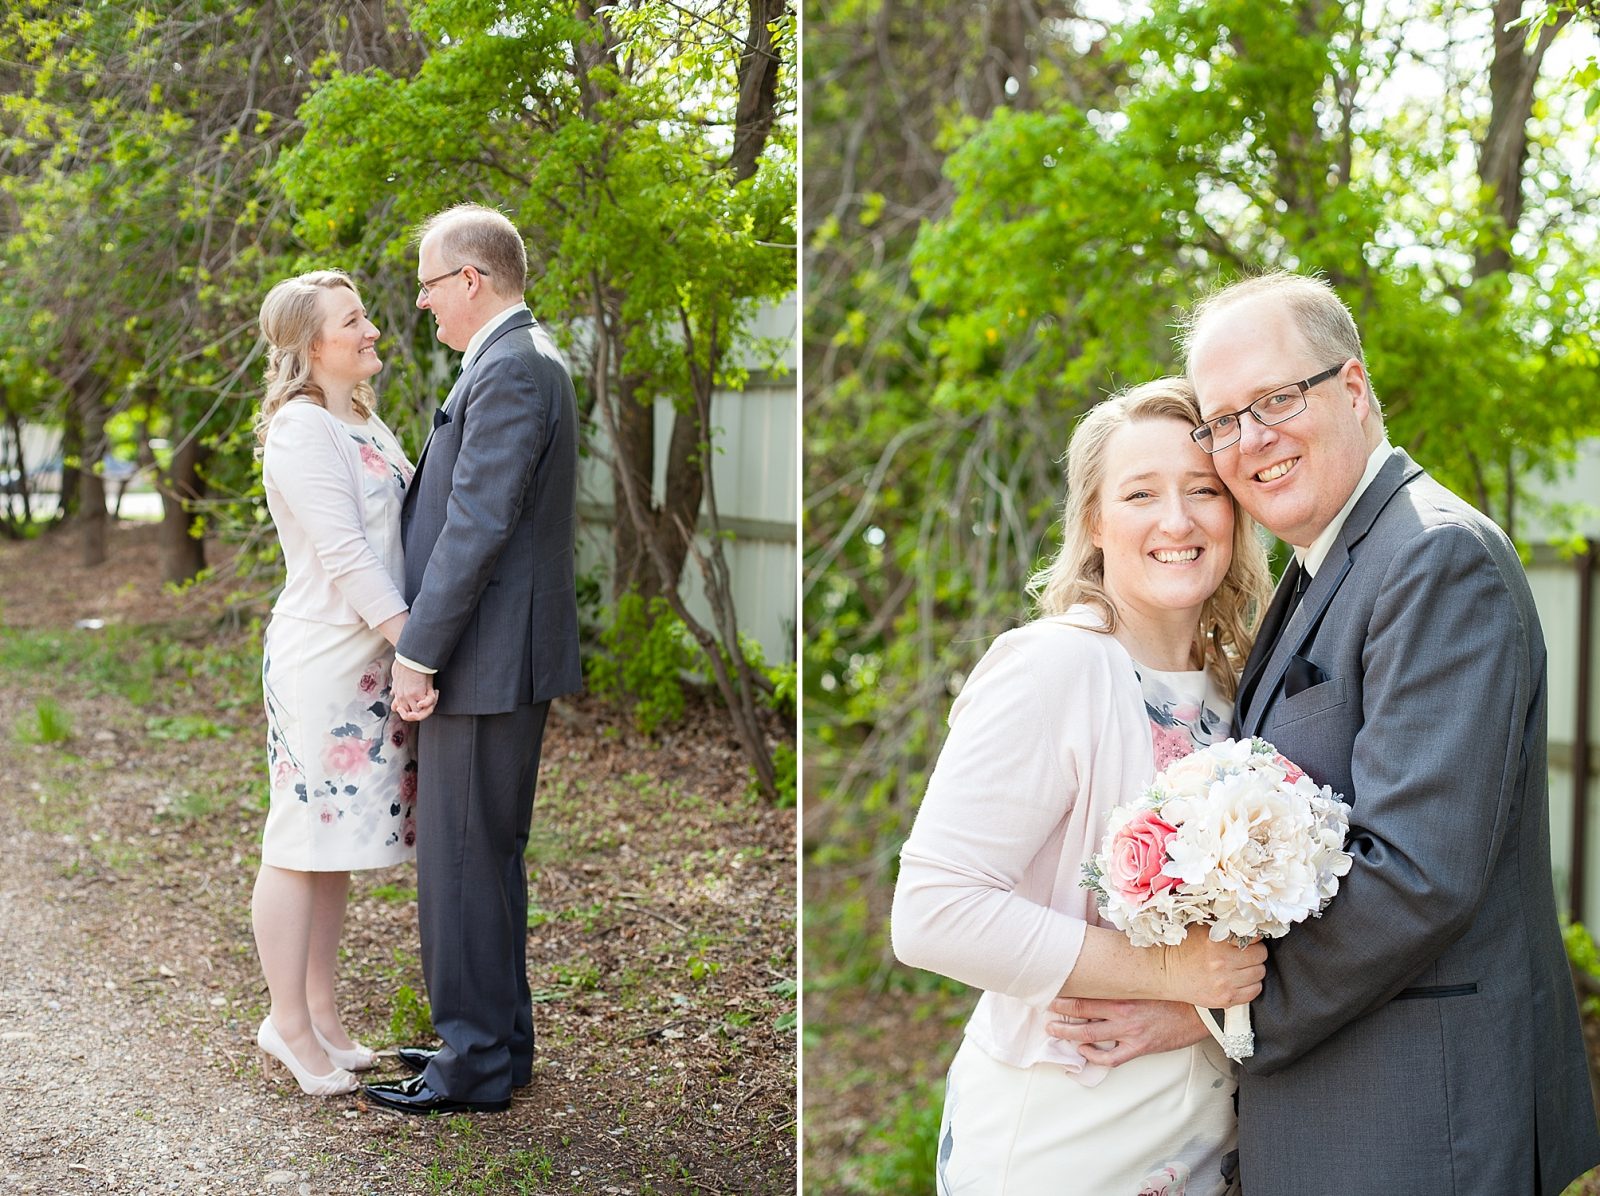 Cary and Stacy | Raymond Wedding - Kinsey Holt Photography - Blog